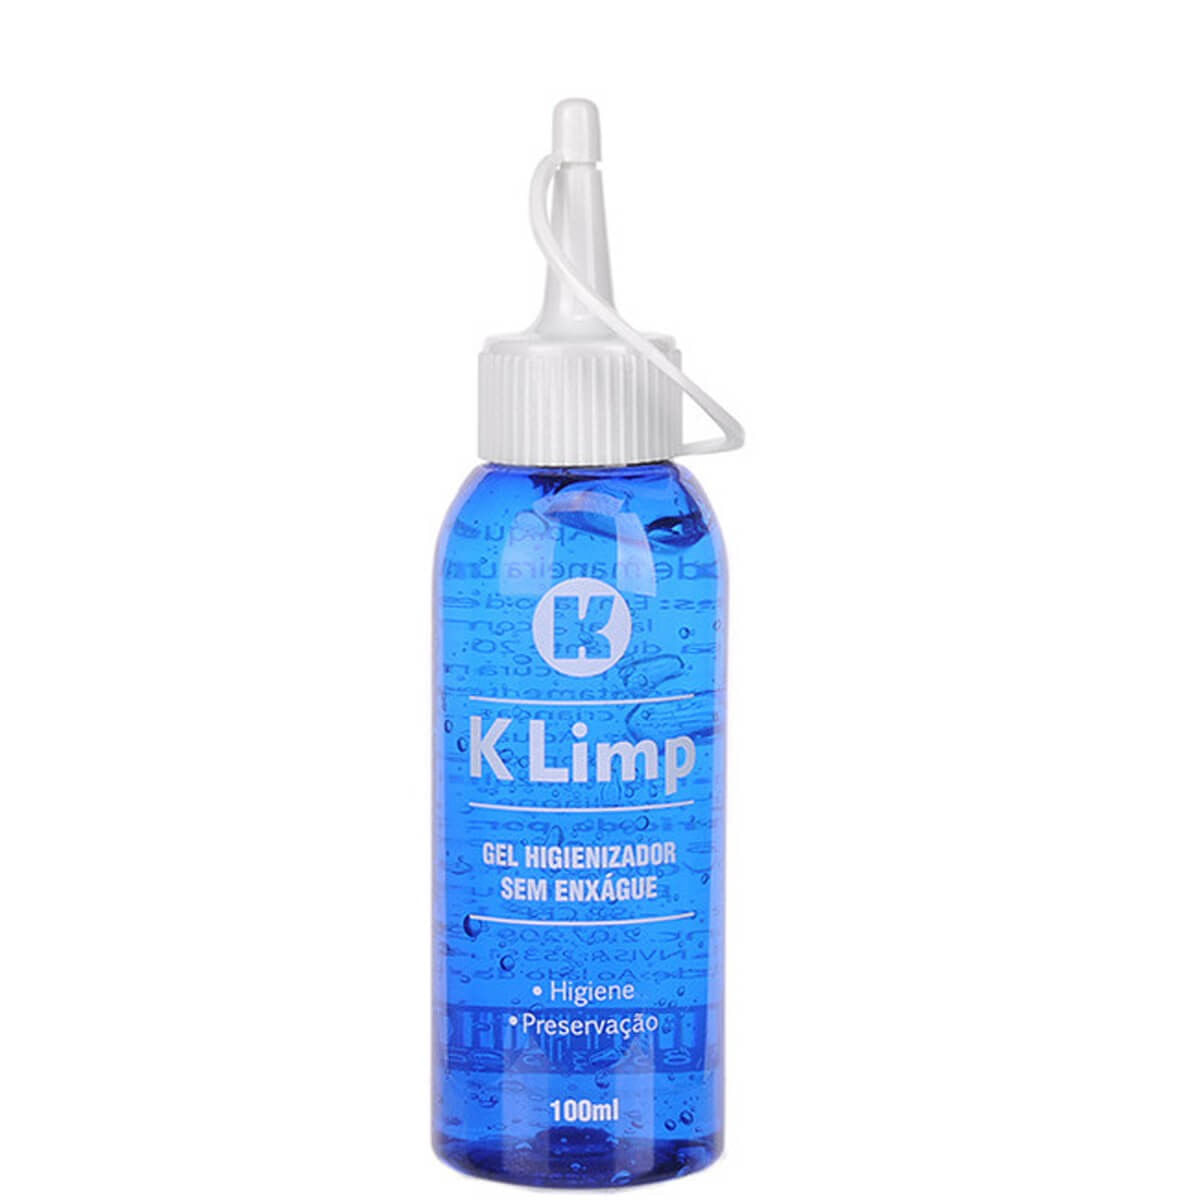 K Limp Gel Higienizador para Limpeza 100ml K Import